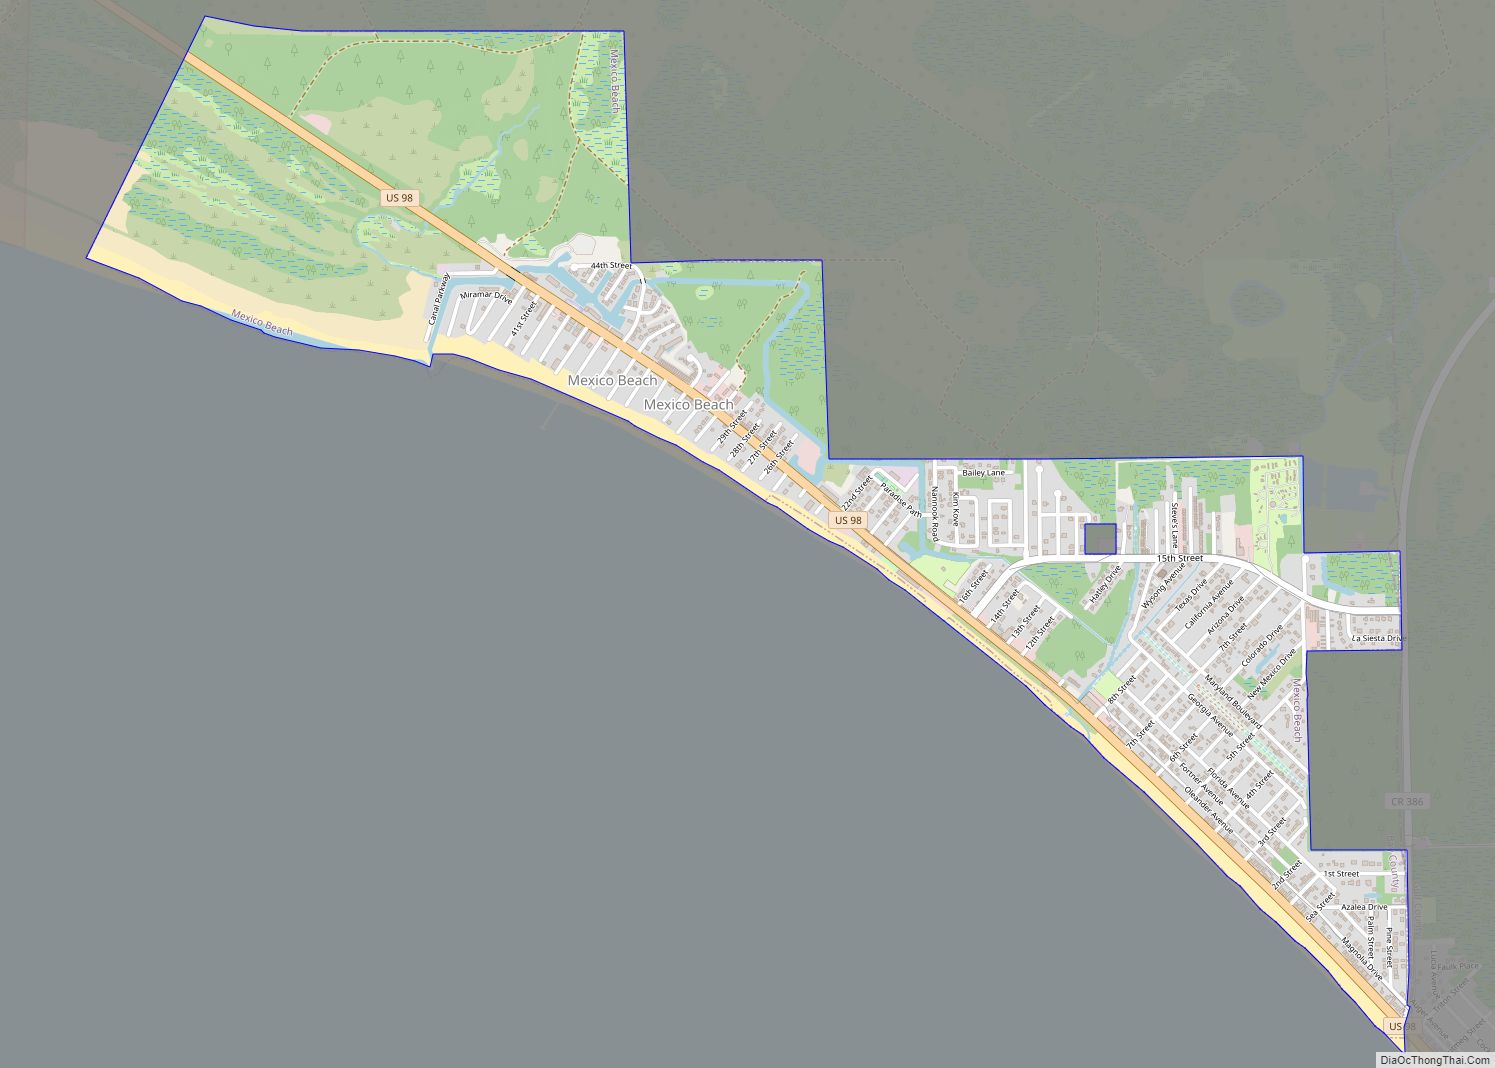 Map of Mexico Beach city